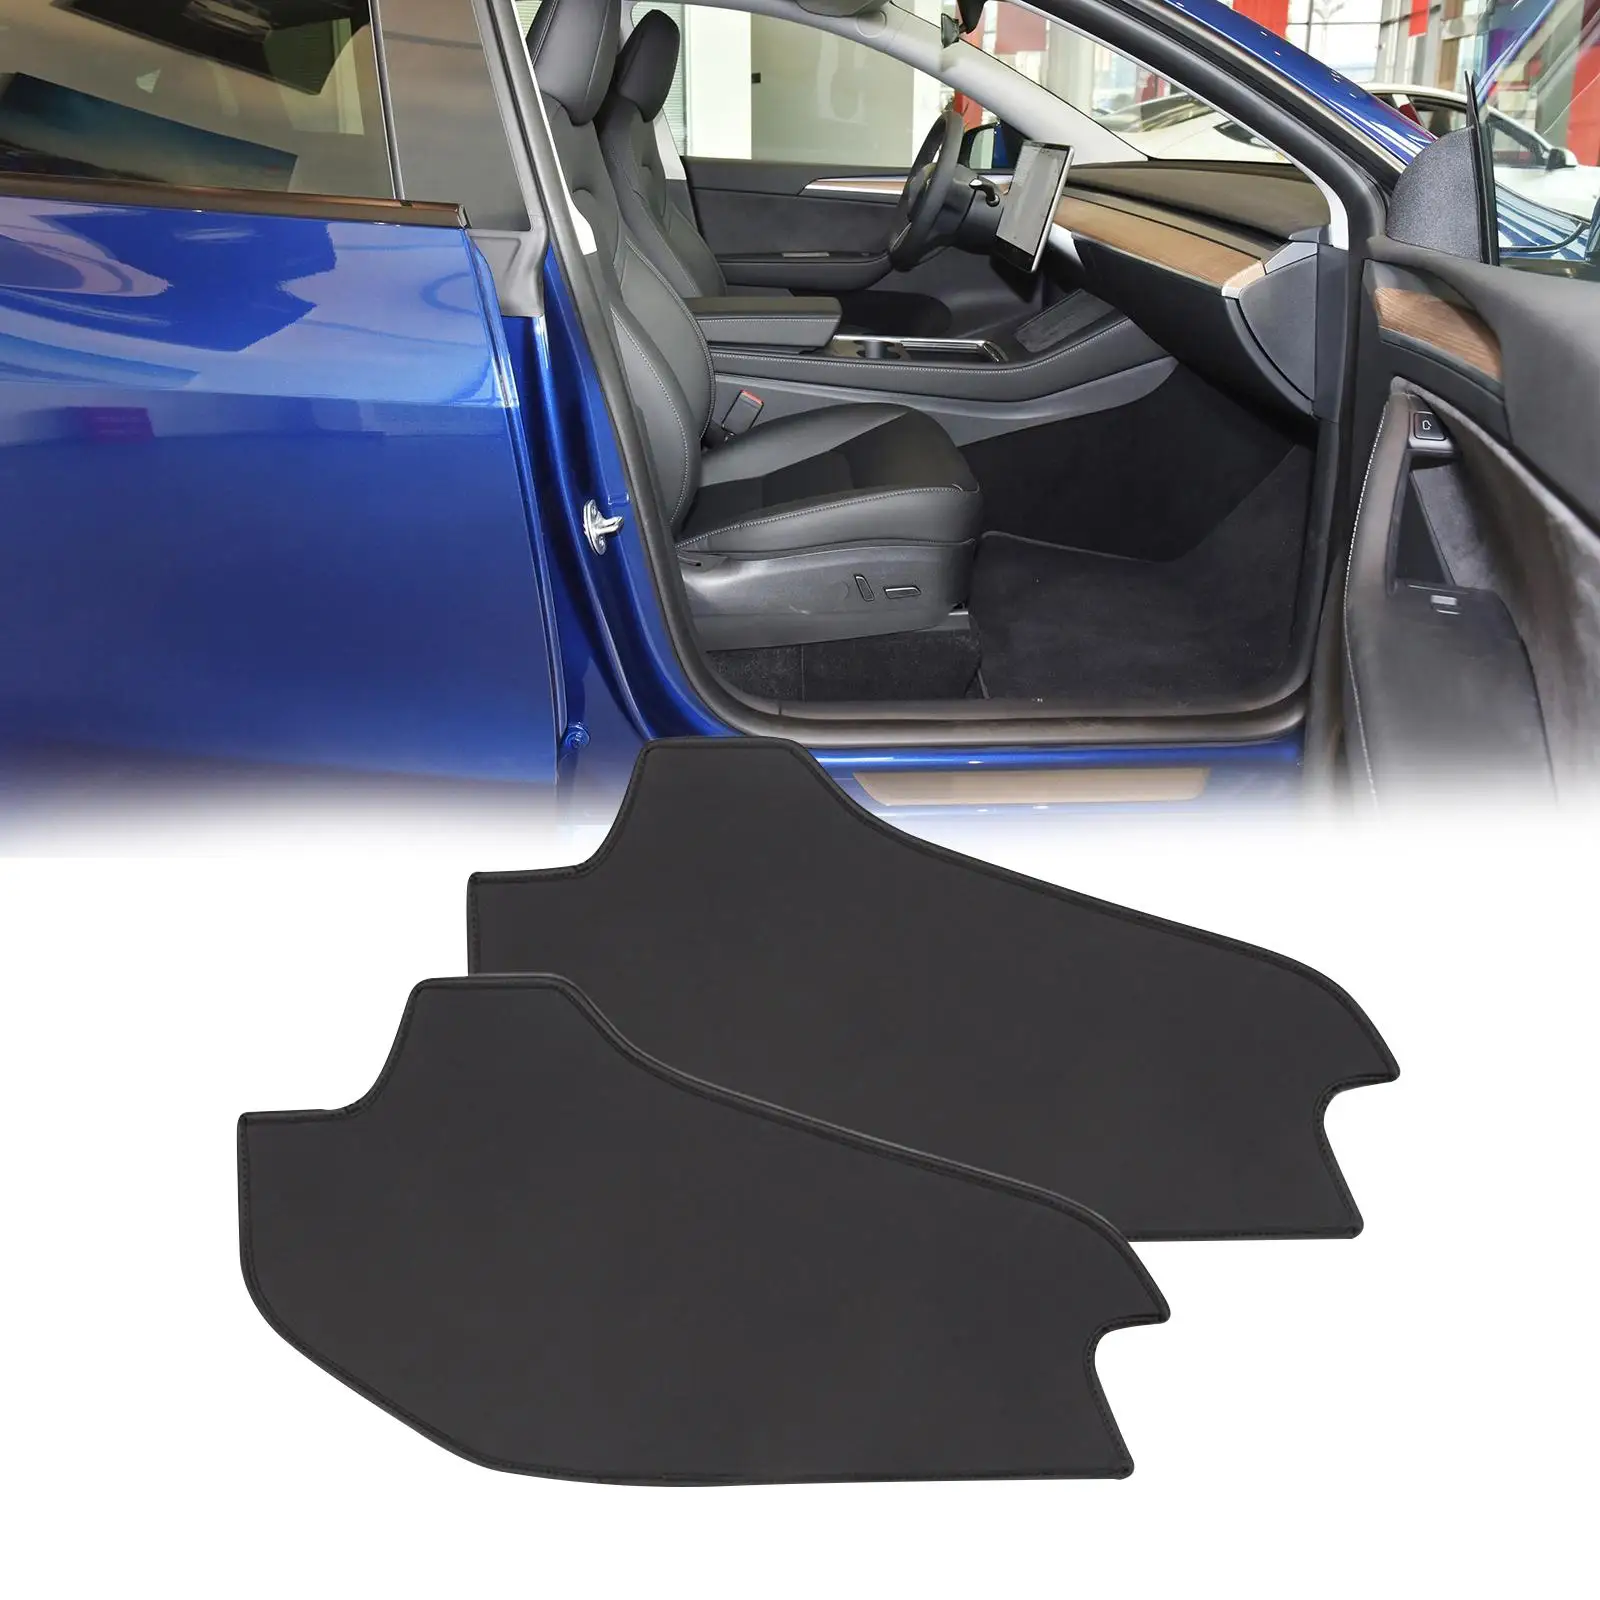 2Pcs Center Console Anti  Replaces Car Interior Accessories Premium Anti Kicking Pad Dirt Protector  Durable